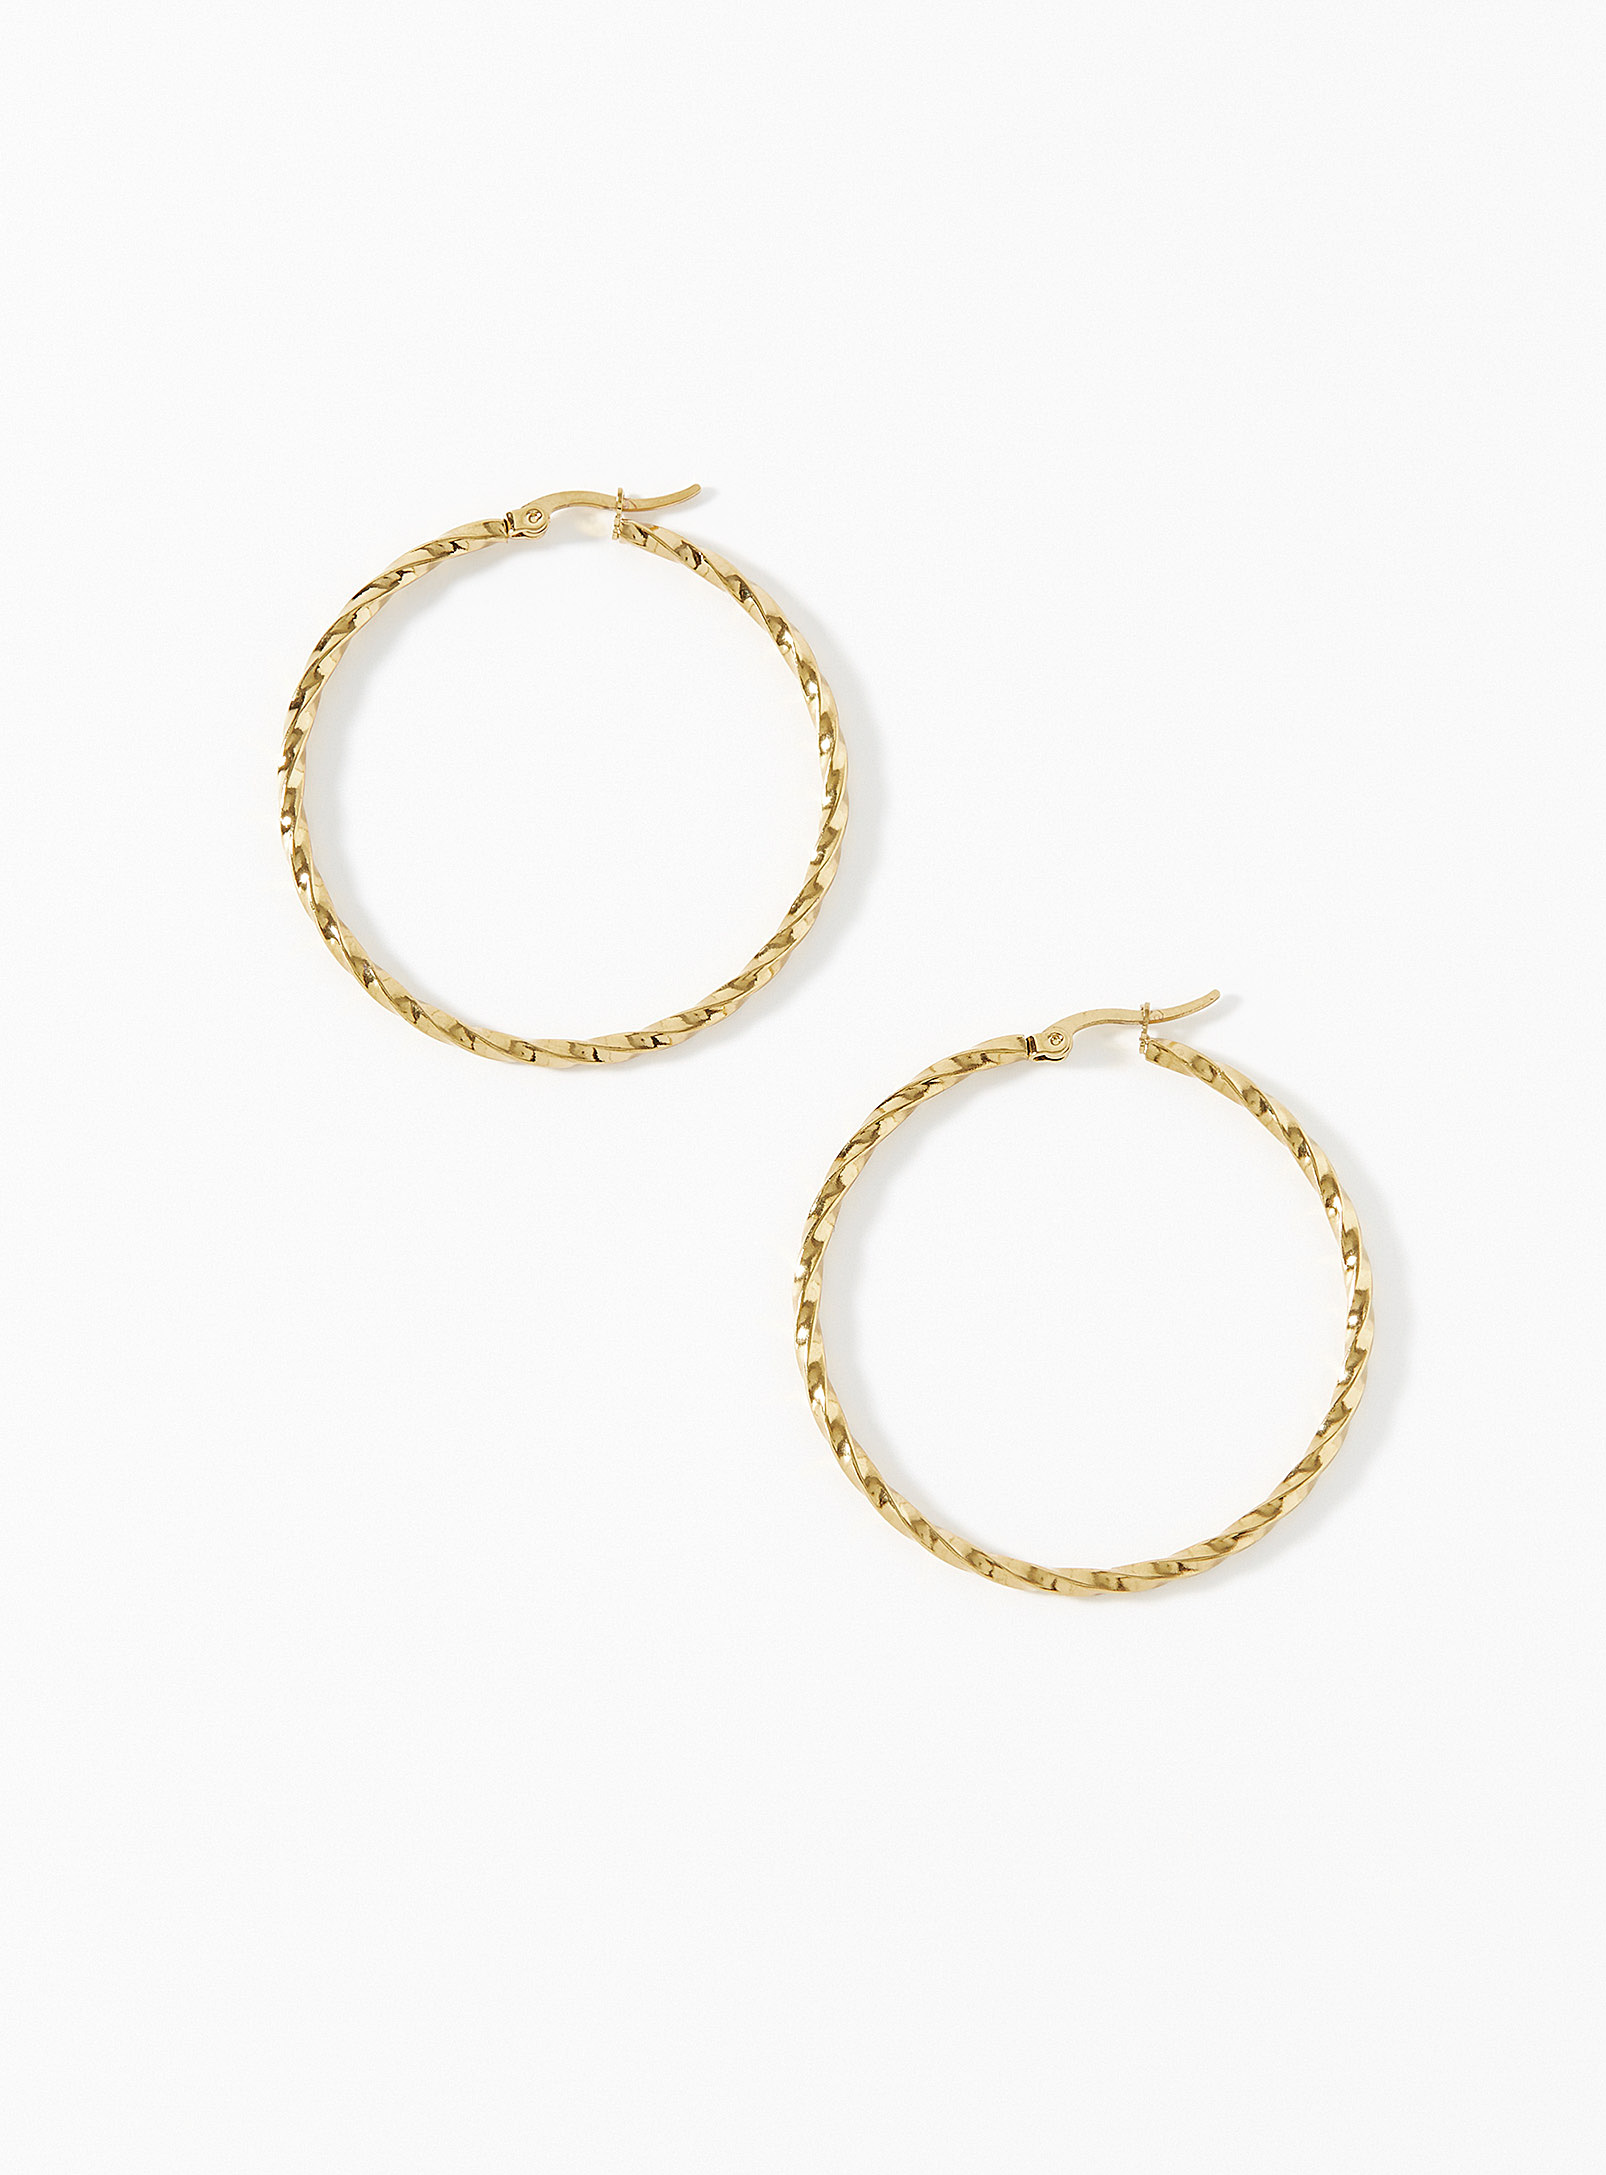 Simons - Women's Oversized twisted Hoop Earrings